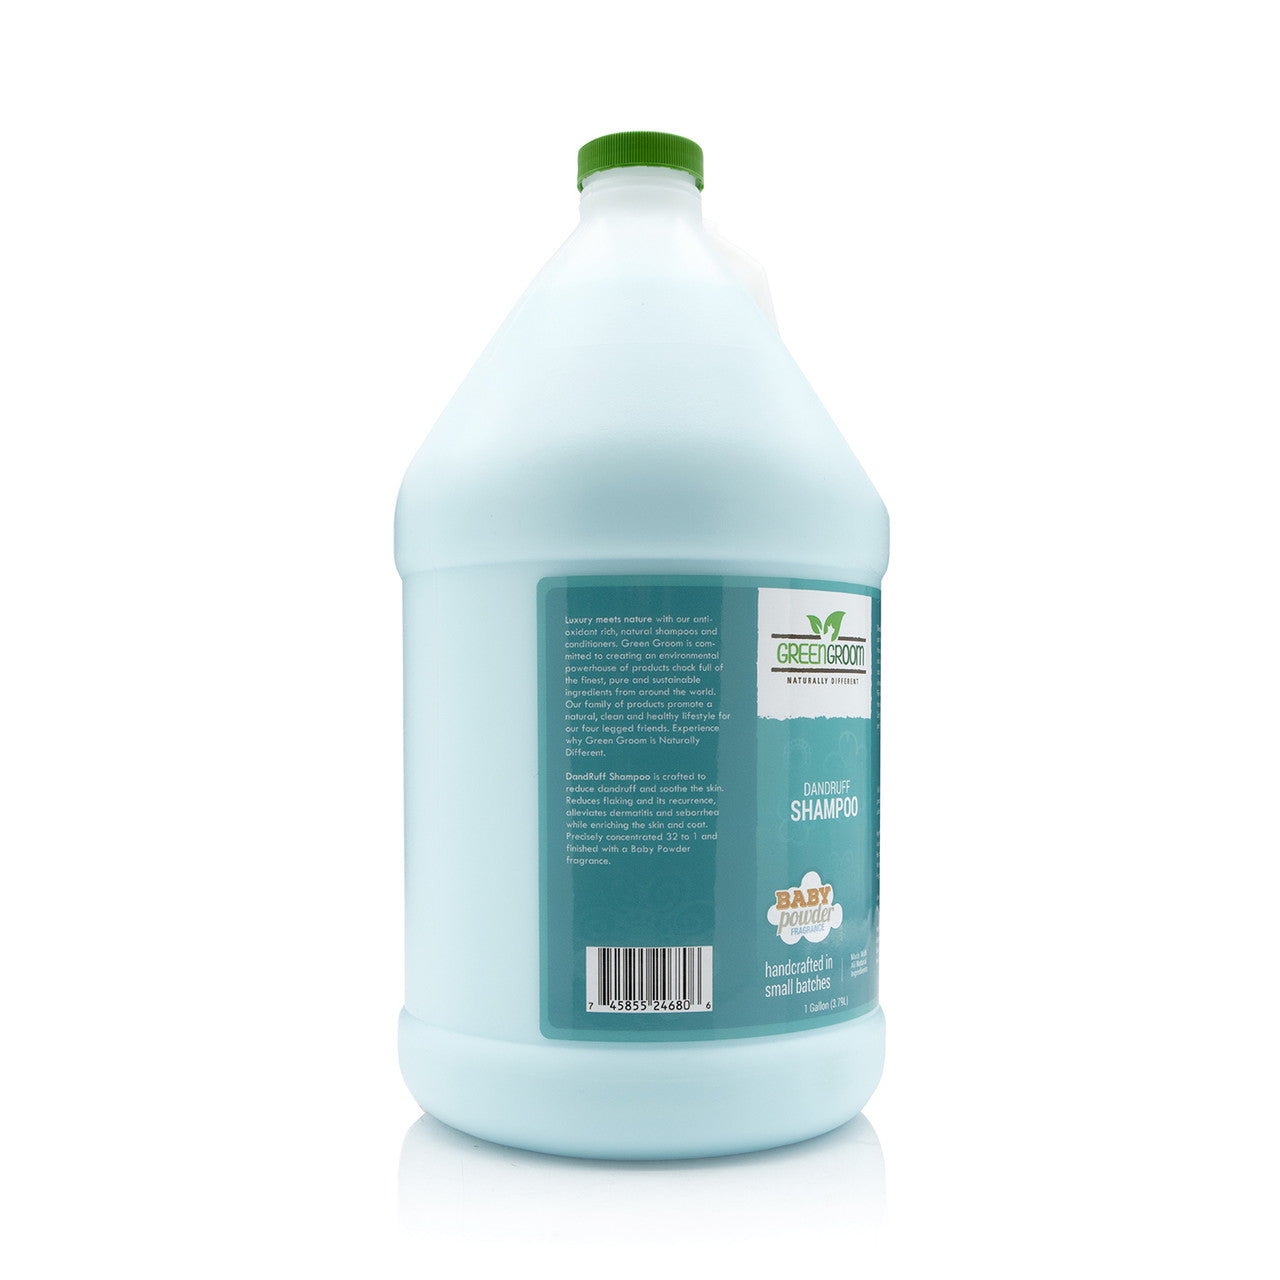 Green Groom DandRUFF Shampoo-Shampoo & Conditioner-Pet's Choice Supply